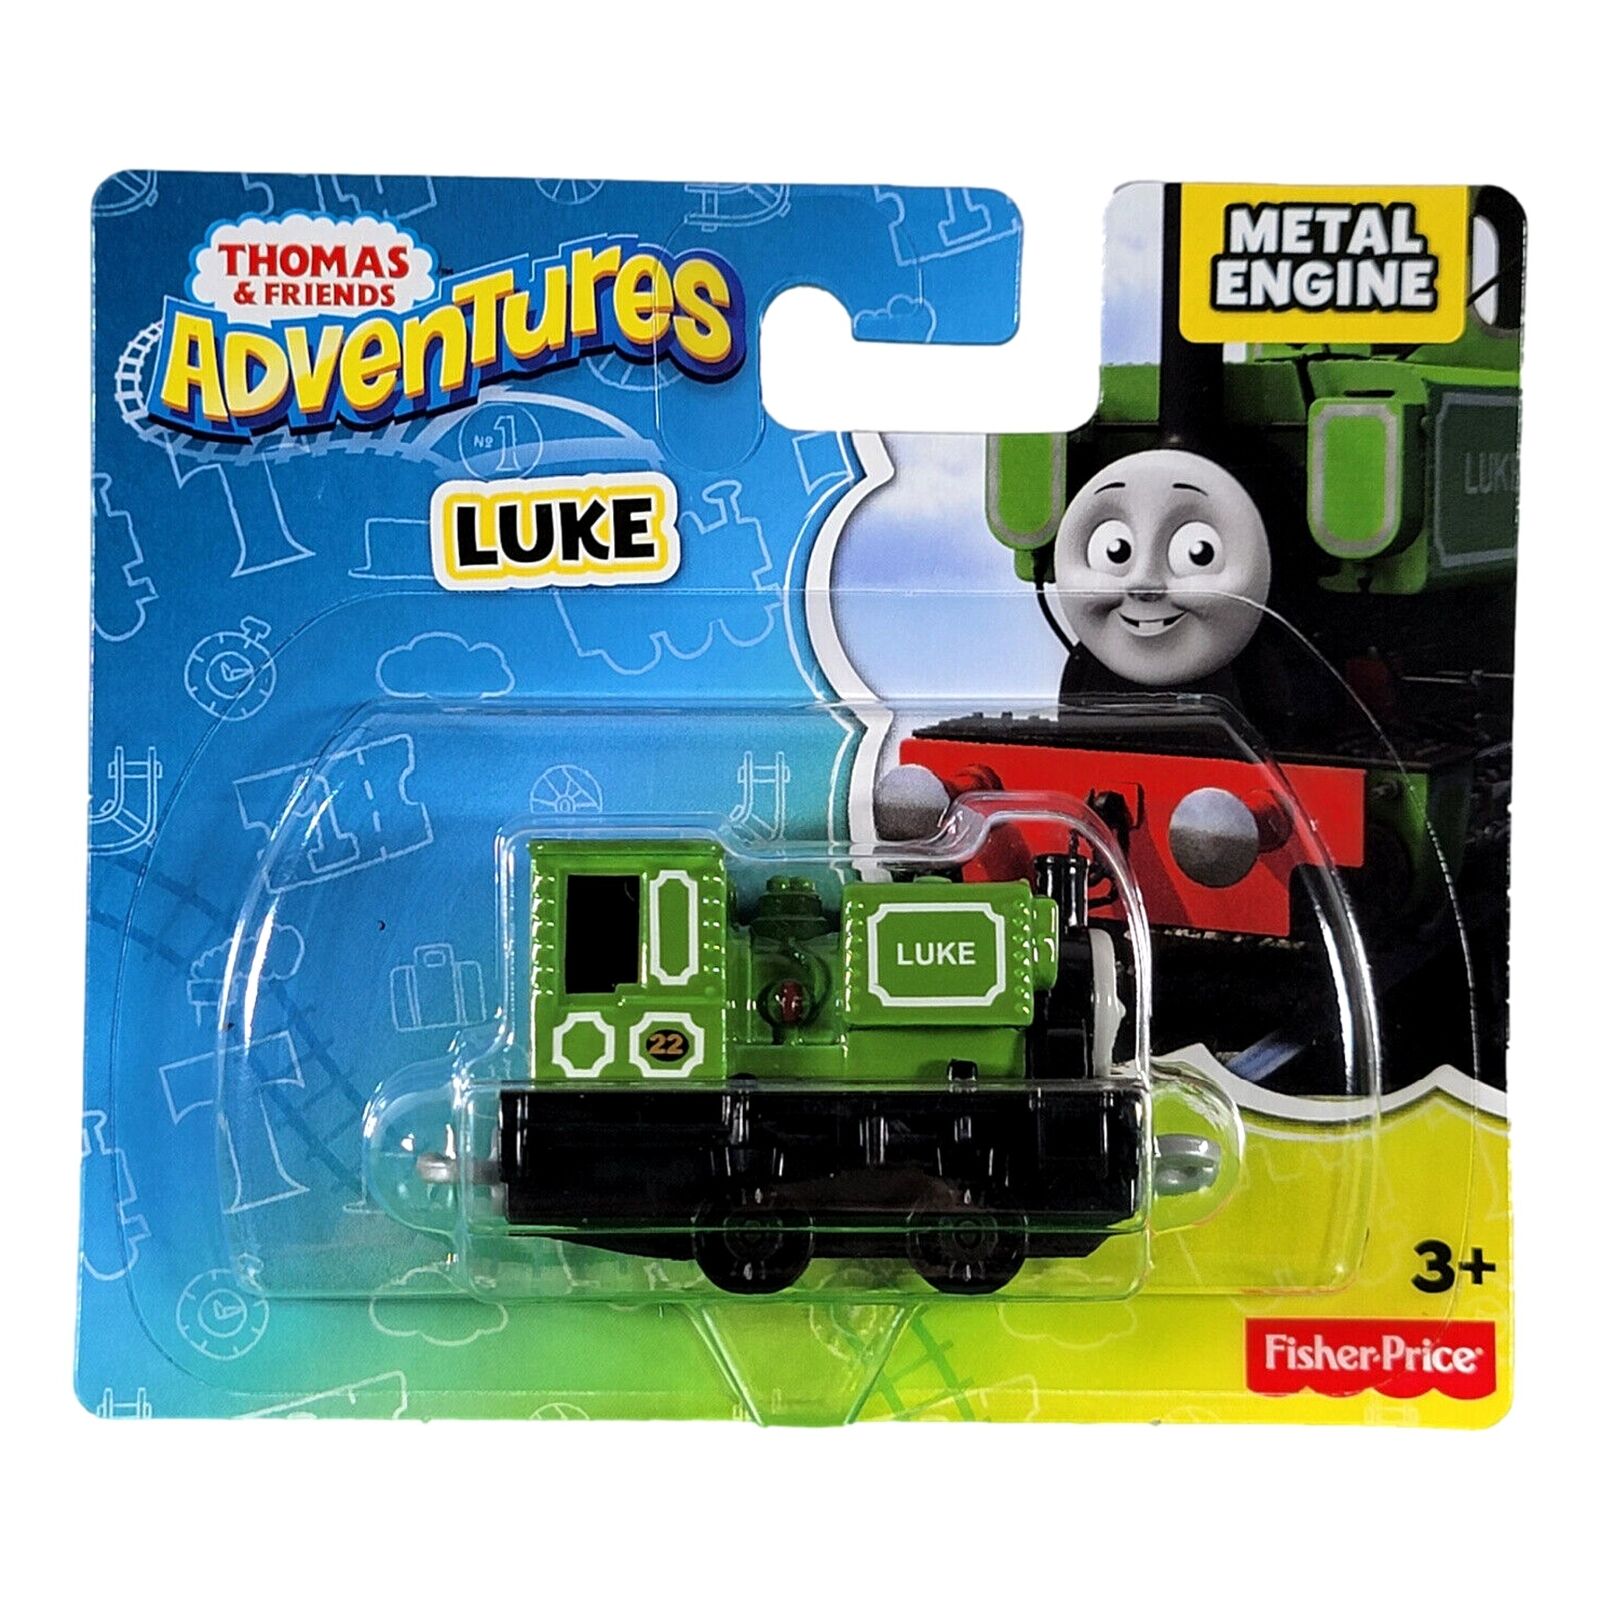 Thomas & Friends Adventures Luke Metal Engine